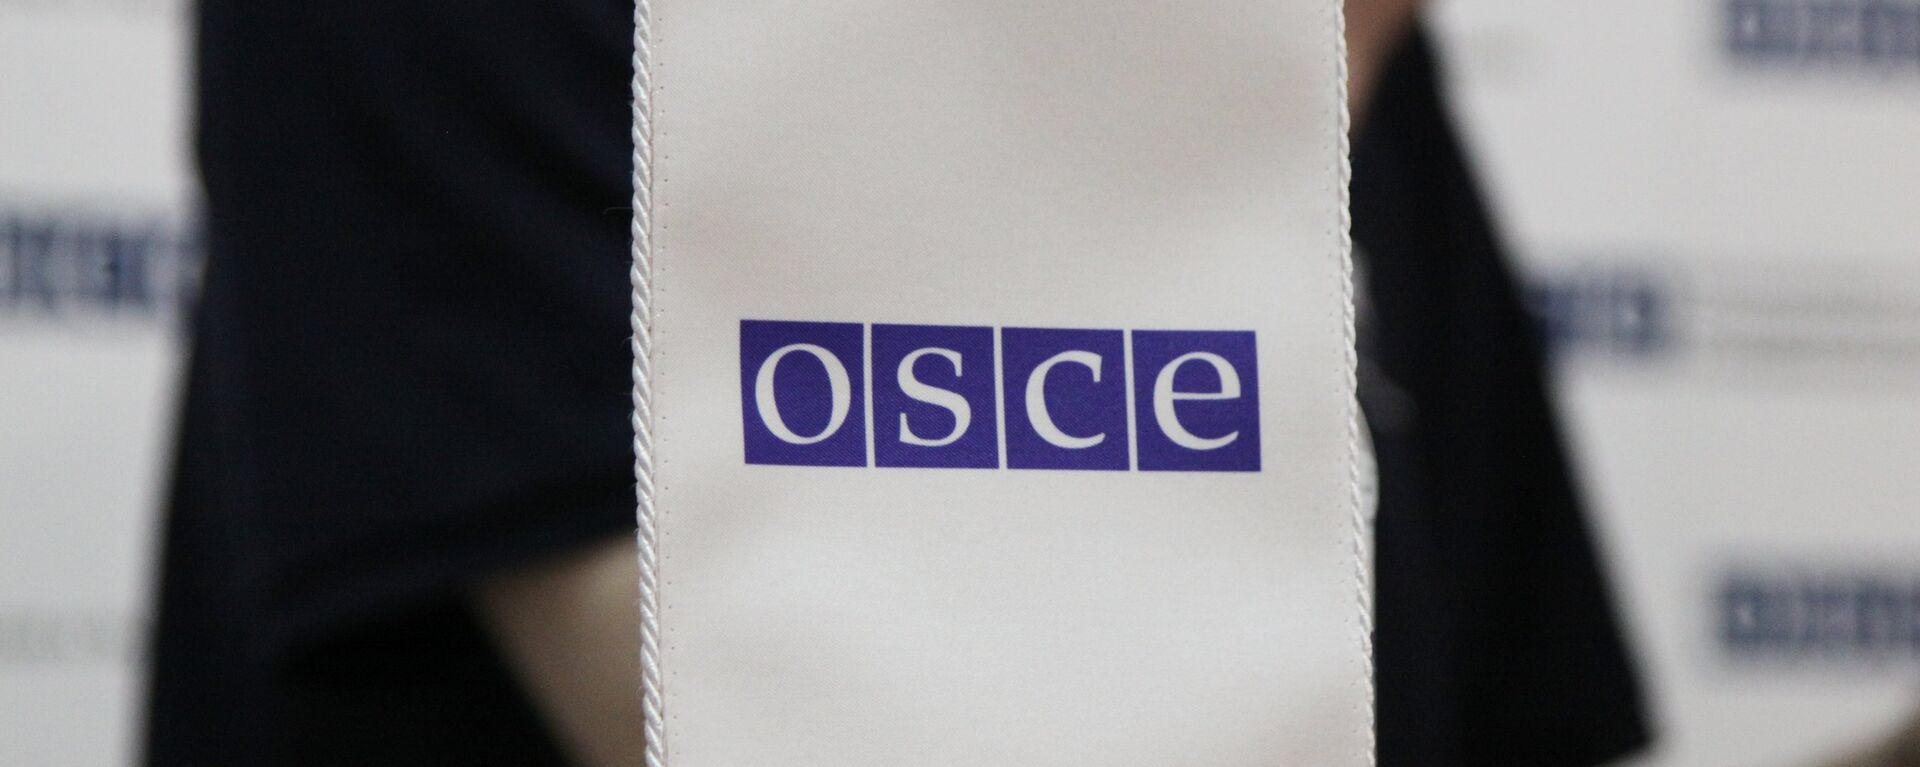 Logo de la OSCE - Sputnik Mundo, 1920, 06.08.2021